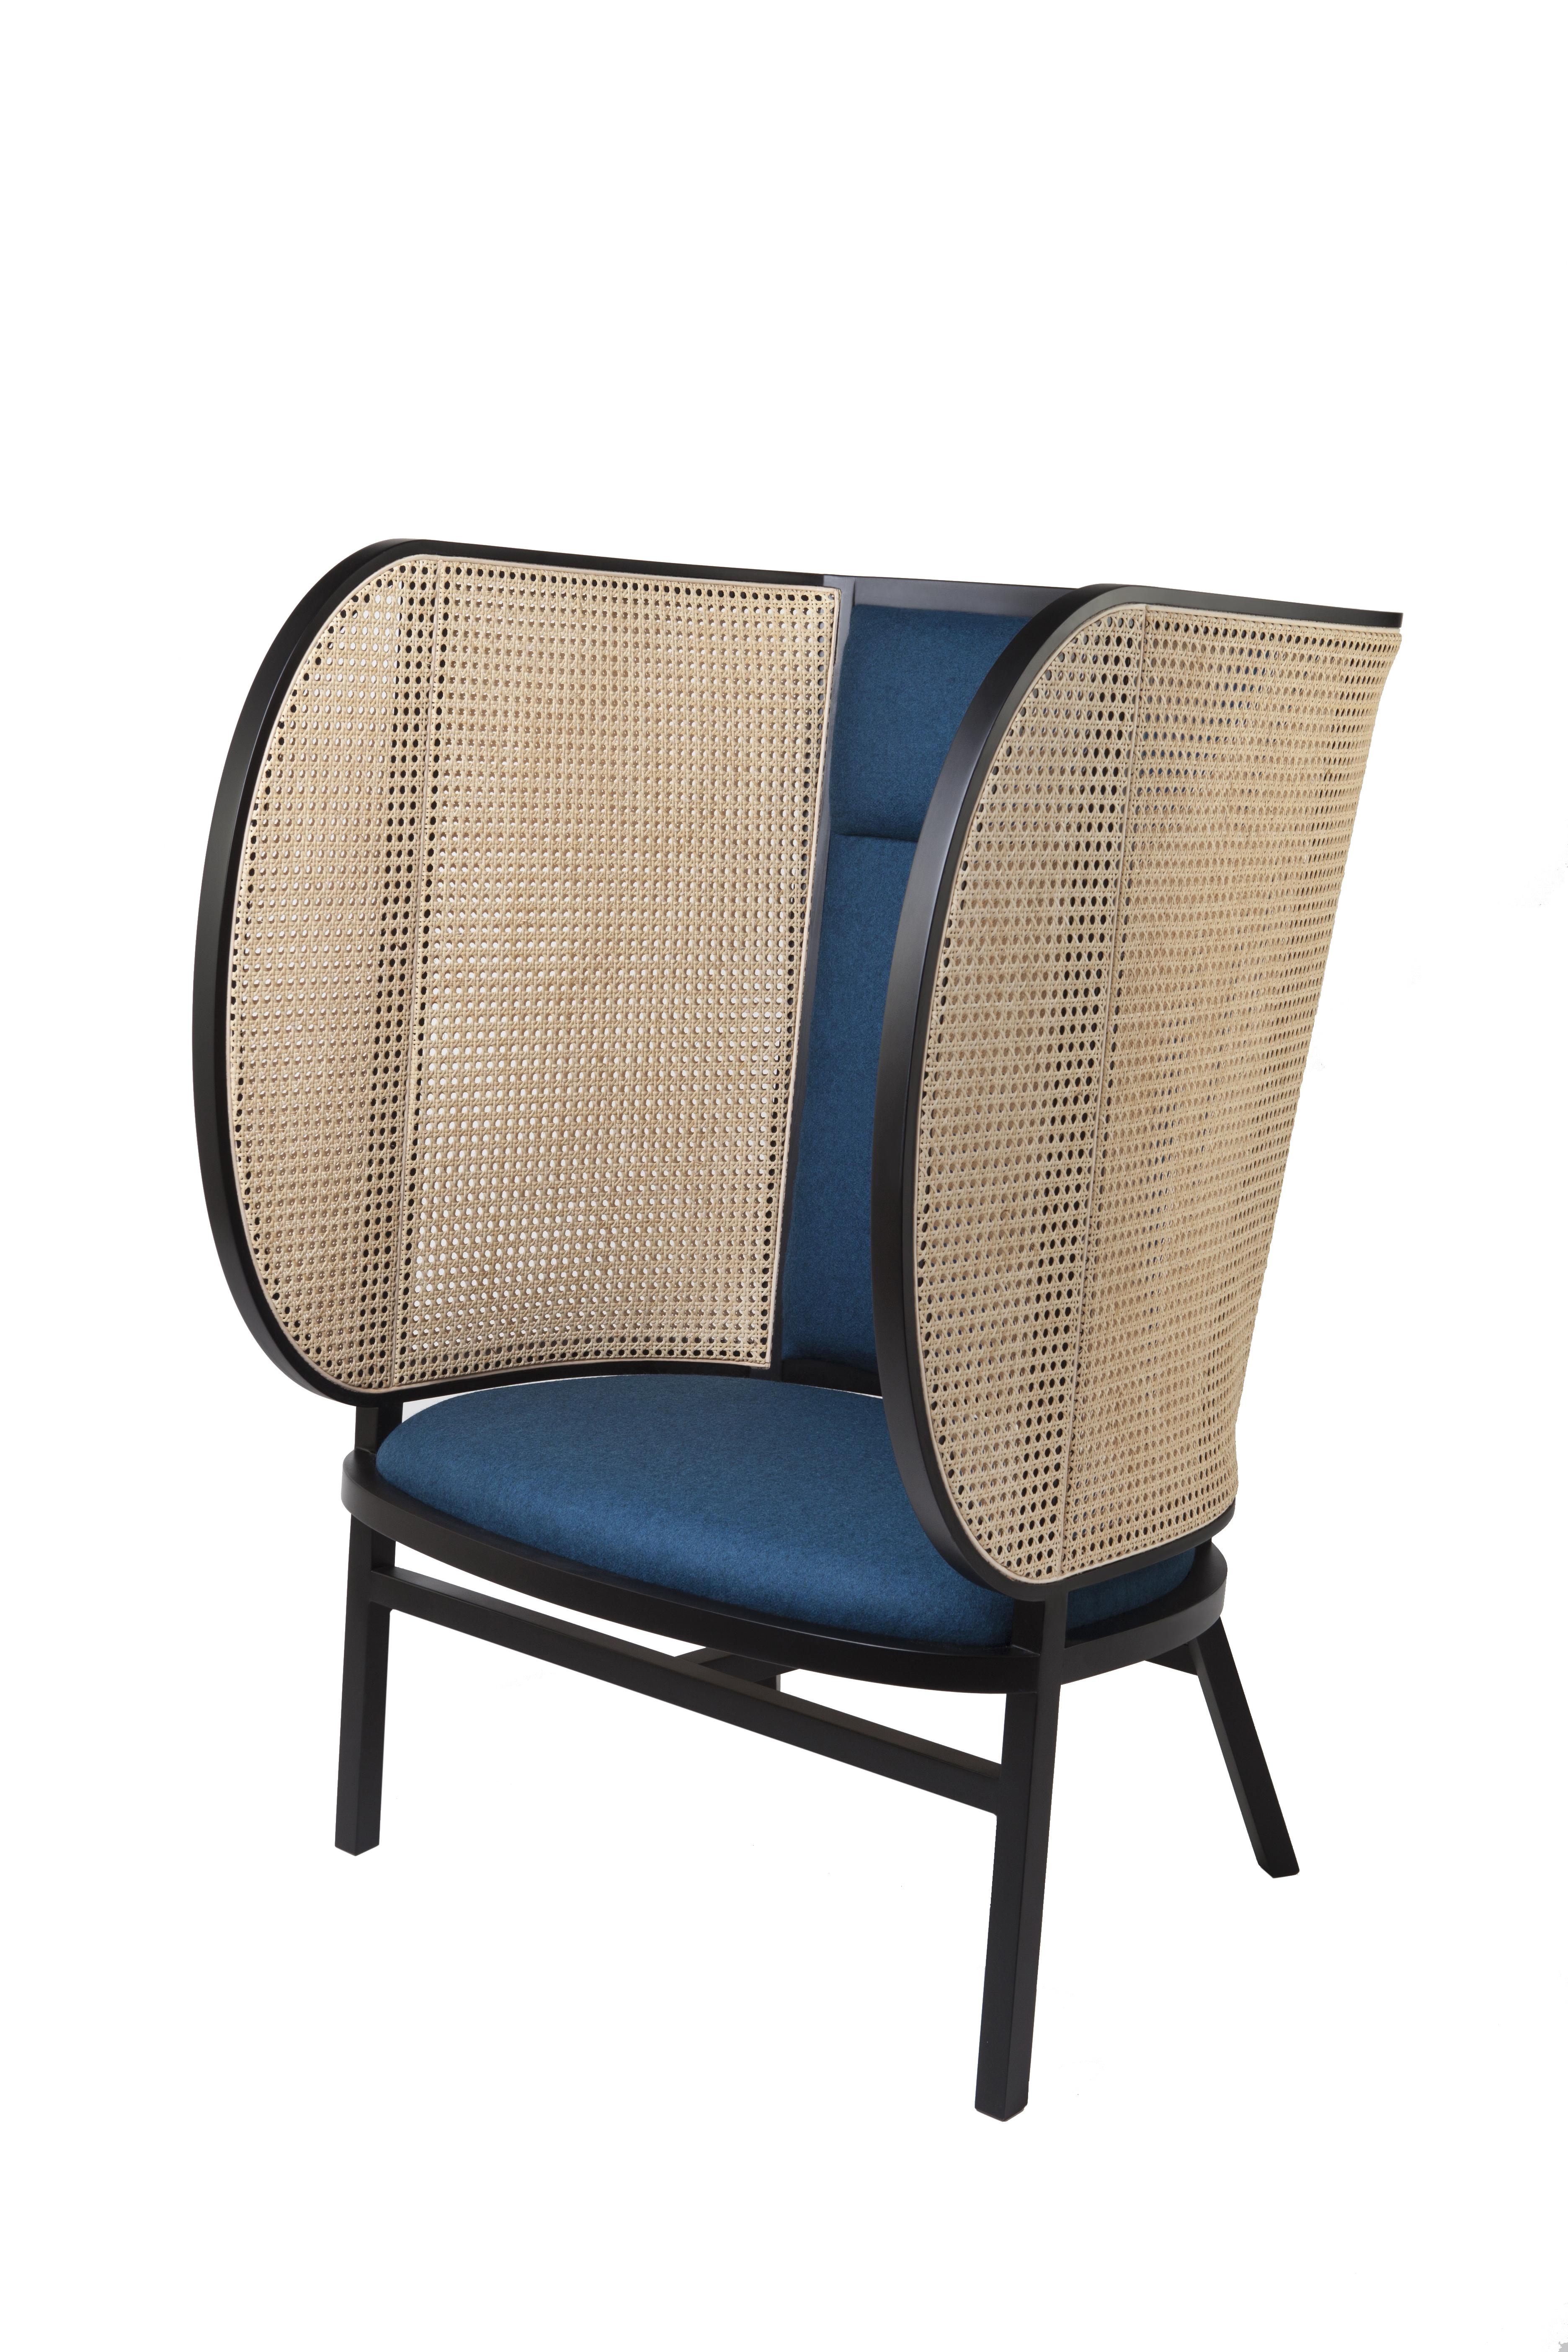 Austrian Gebrüder Thonet Vienna GmbH Hideout Lounge Black Chair with Upholstered Backrest For Sale